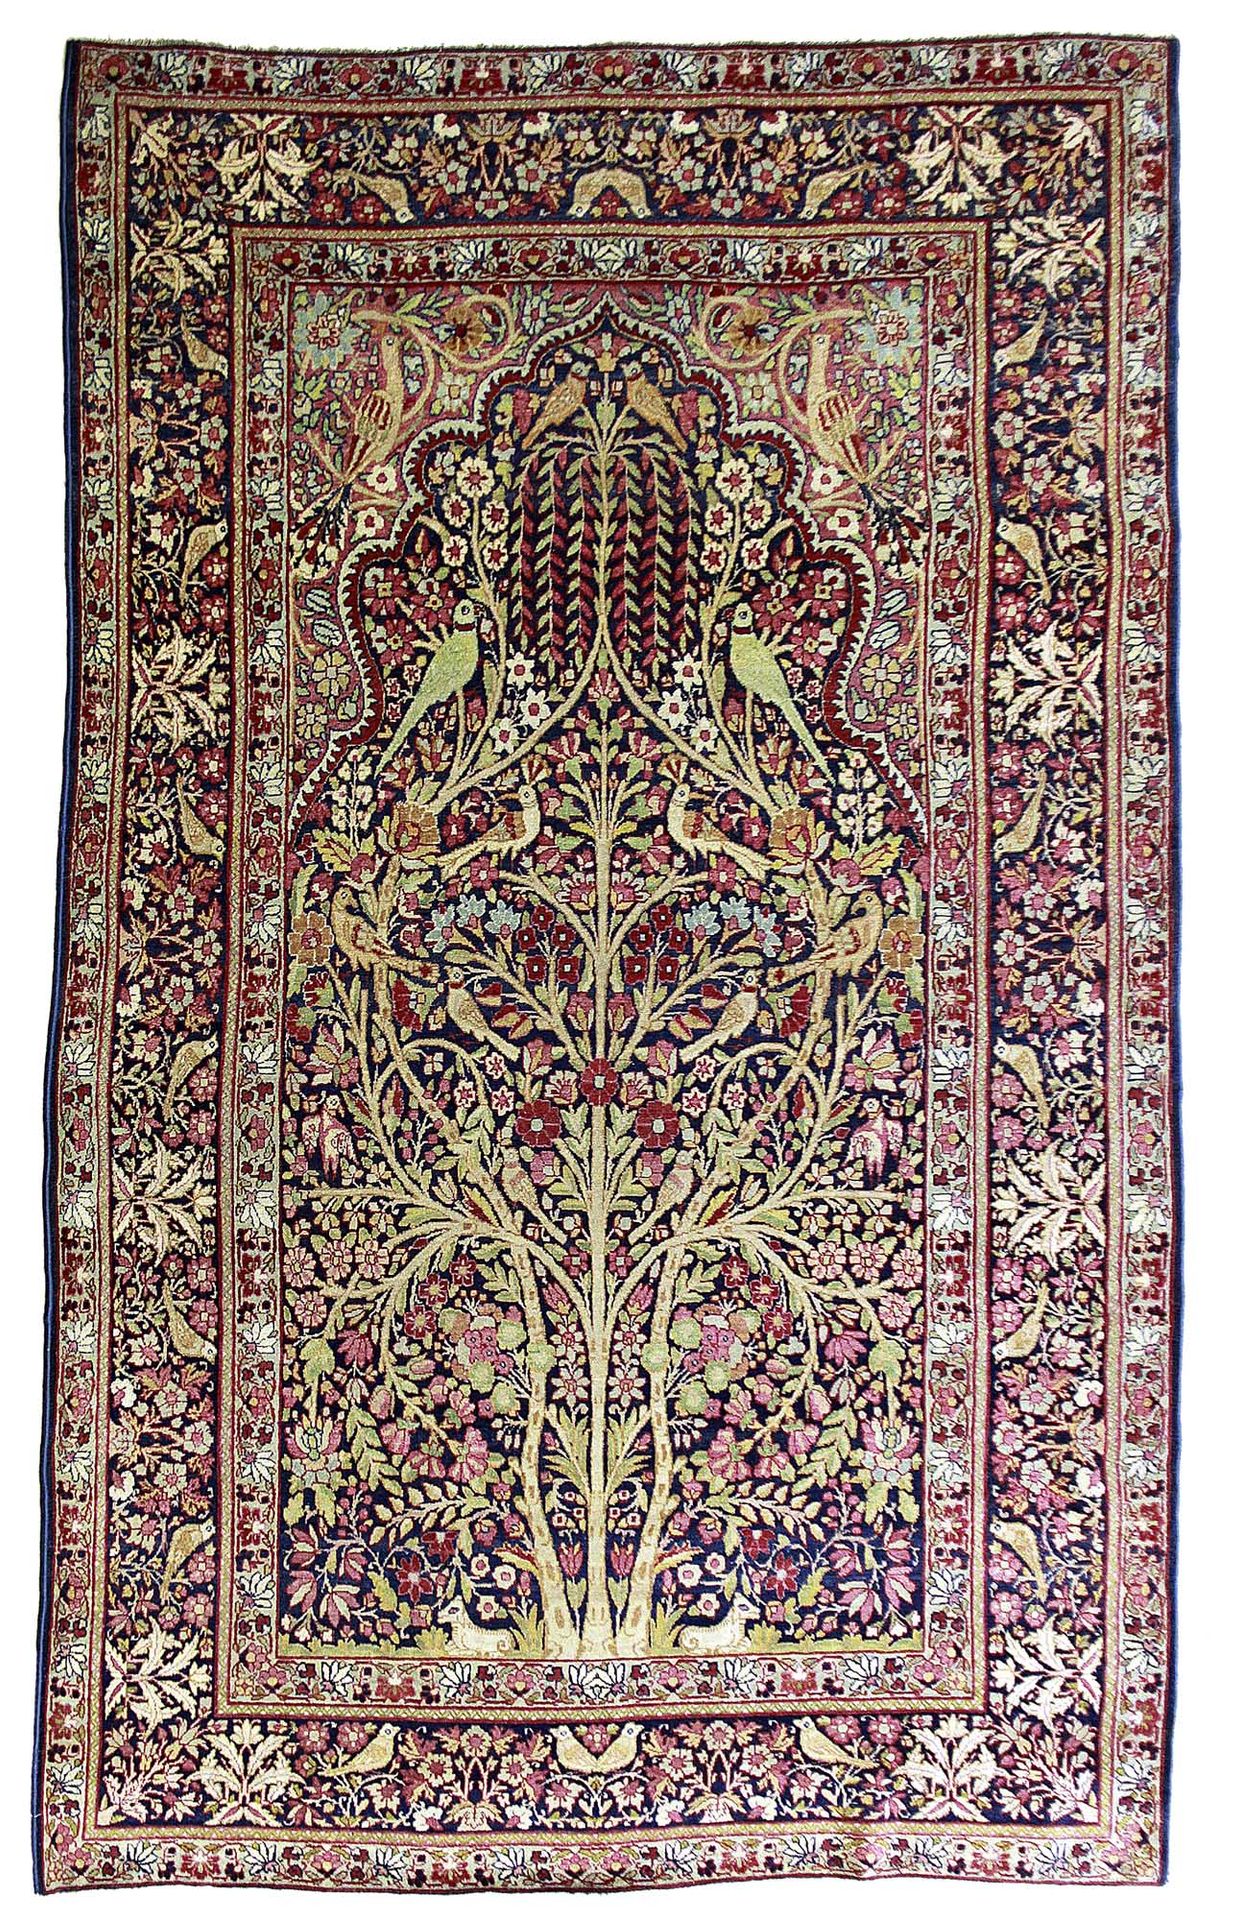 Null Tapis KIRMAN-LAVER (Perse), fin du 19e siècle

Dimensions : 224 x 128cm

Ca&hellip;